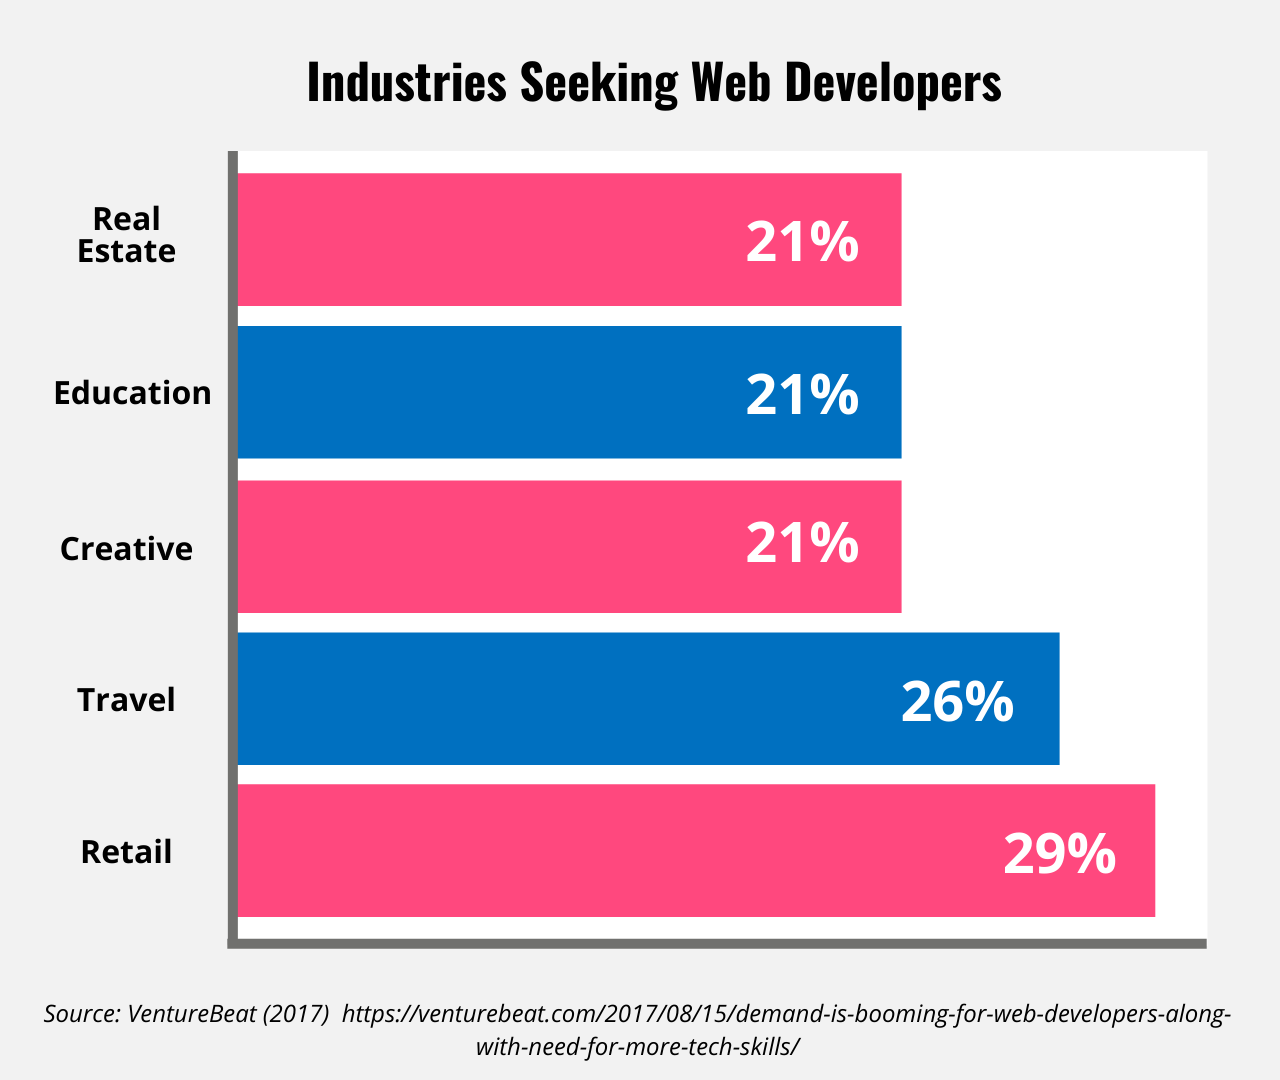 Bar graph showing industries seeking web developers